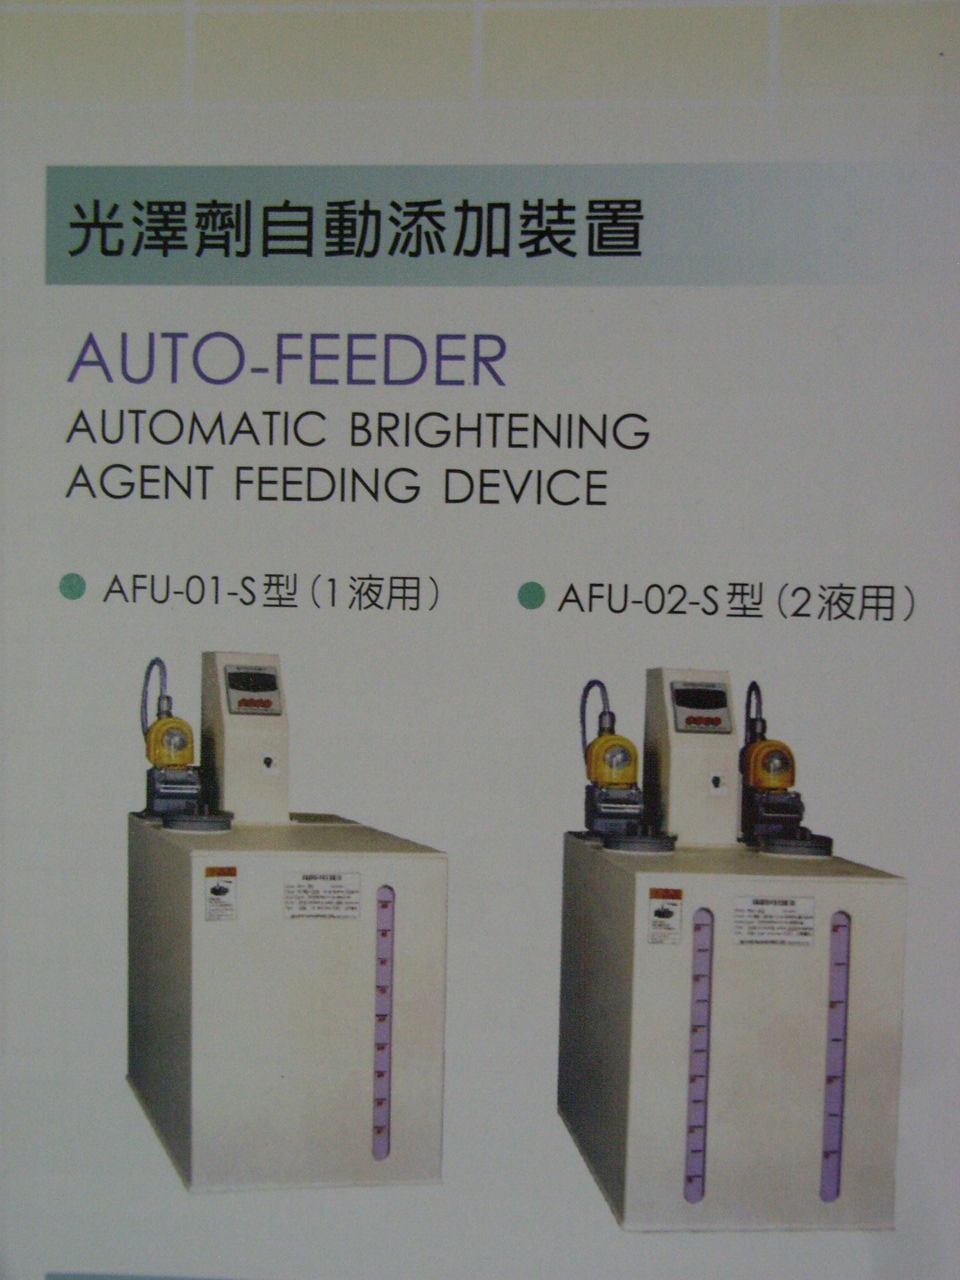 AUTO-FEEDER 光澤濟自動添加裝置